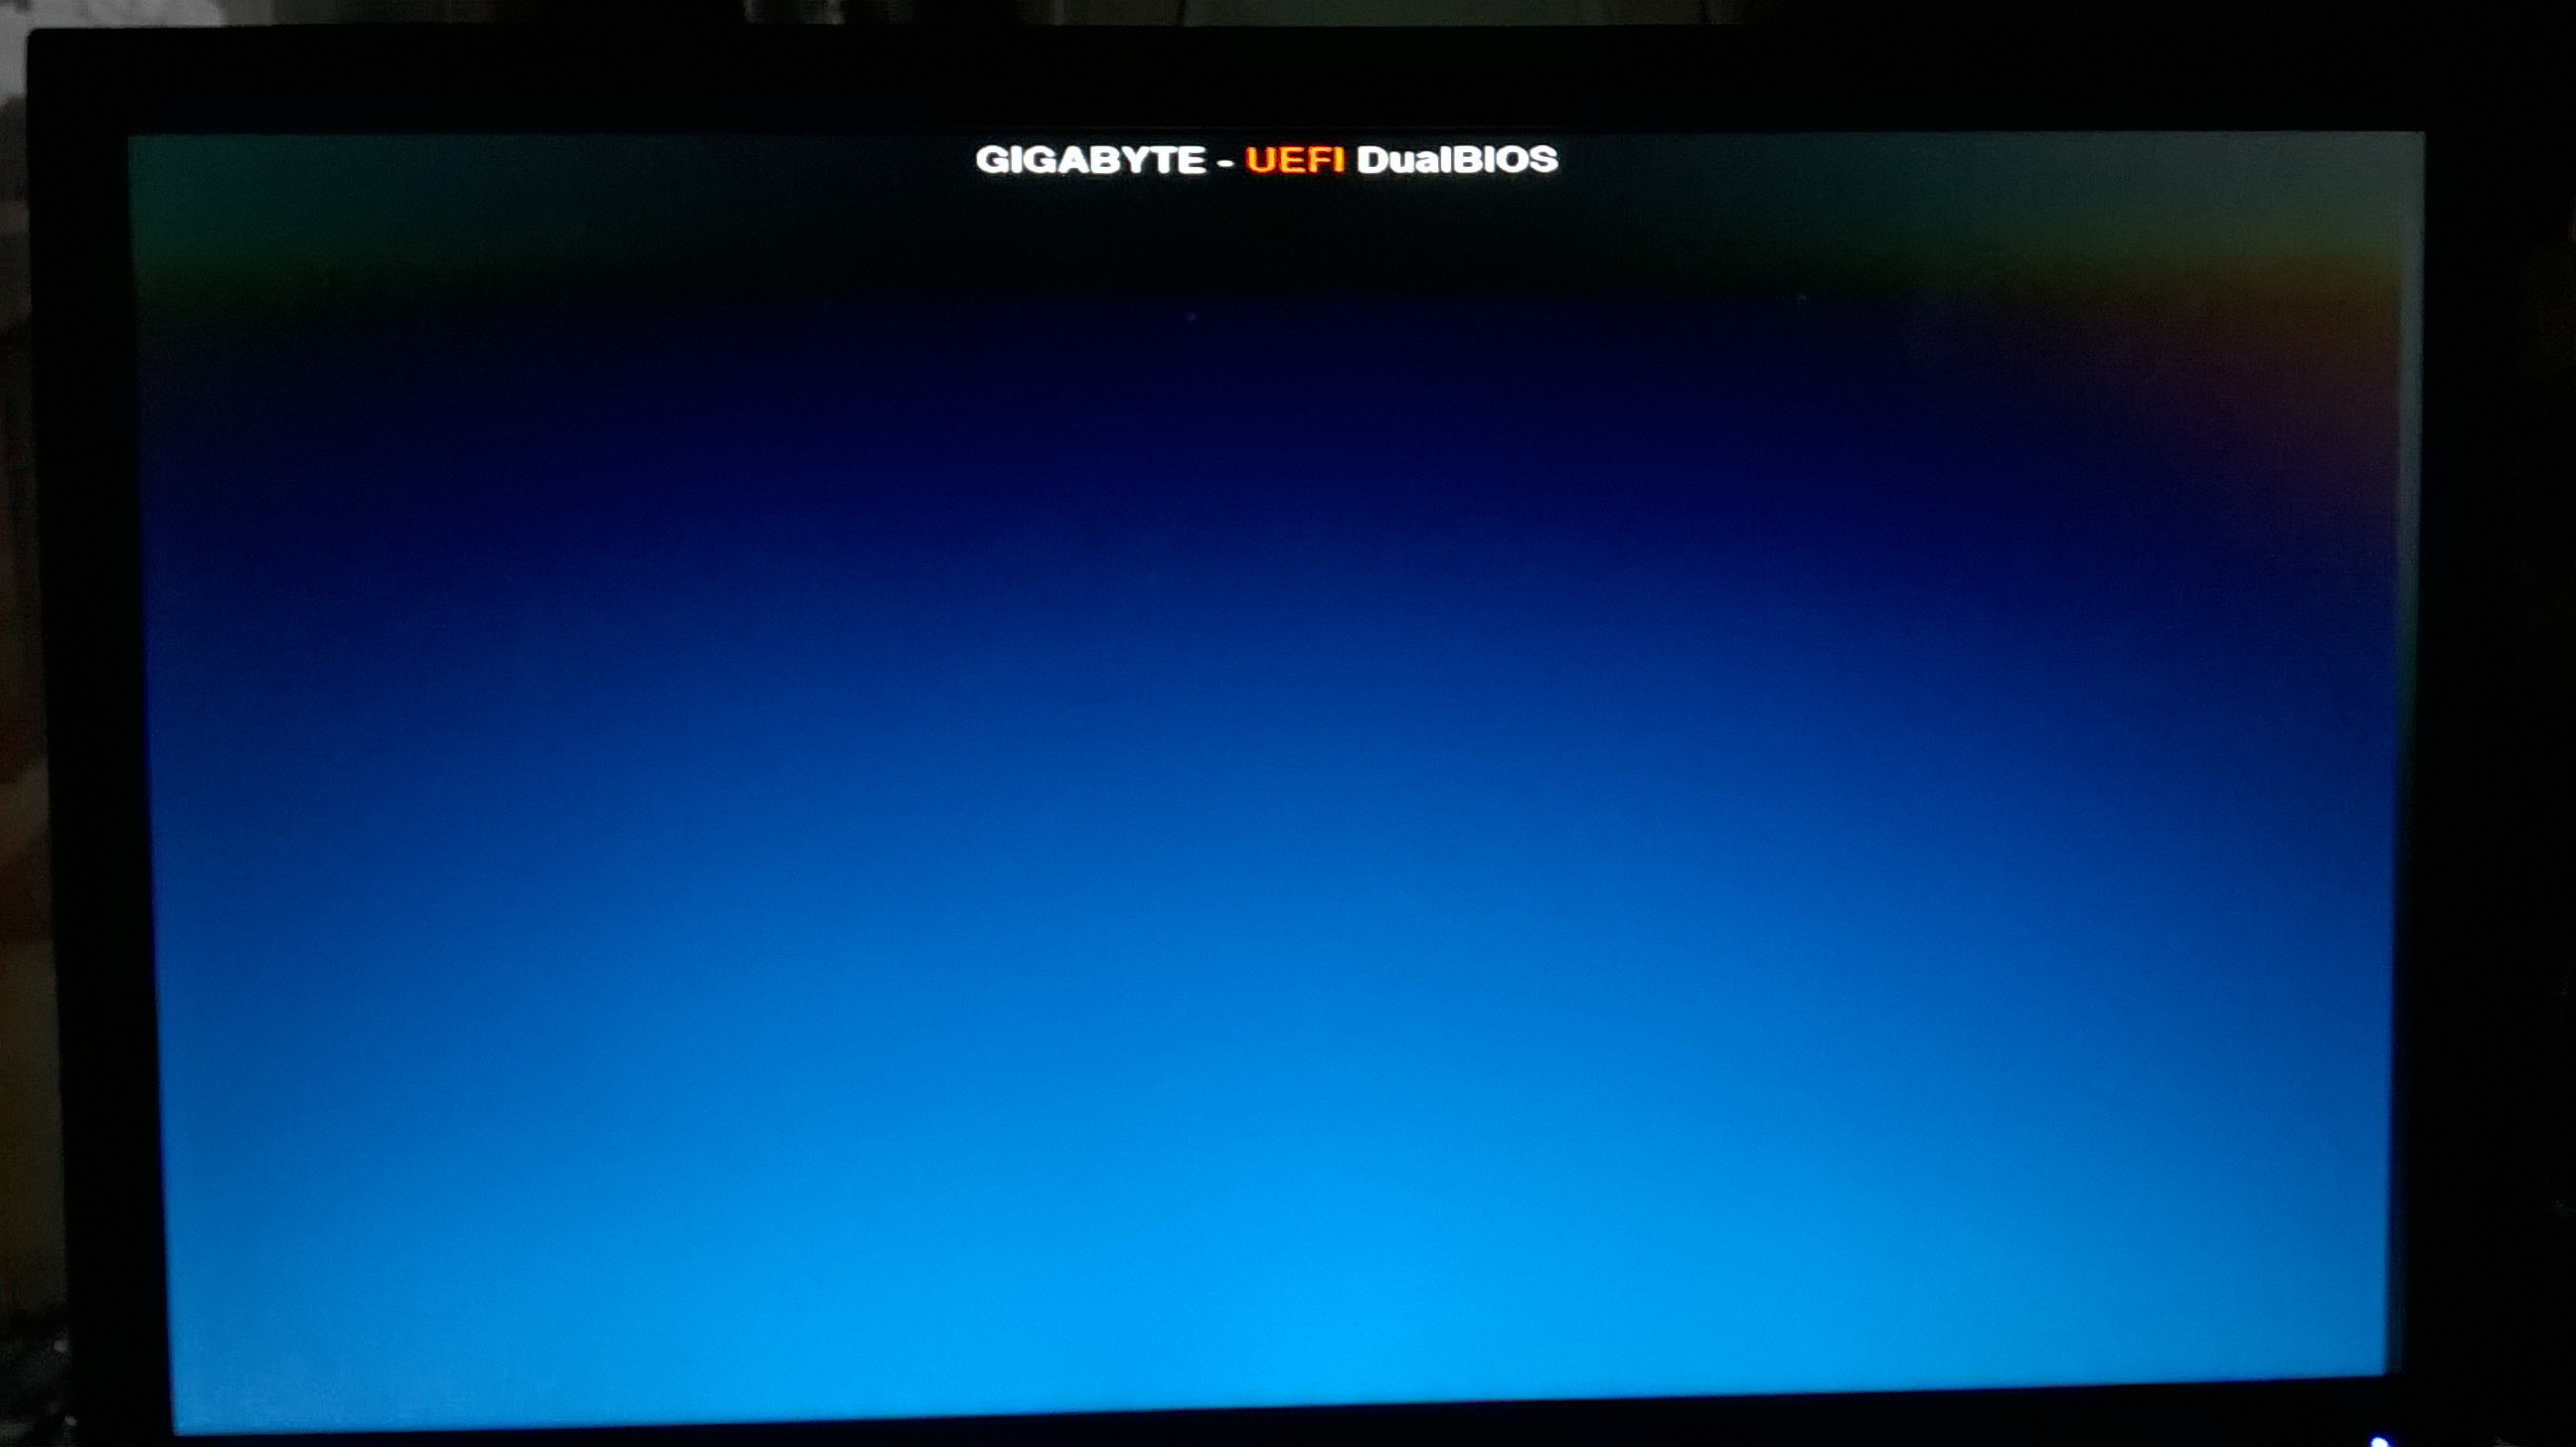 gigabyte moderkort blå skärm